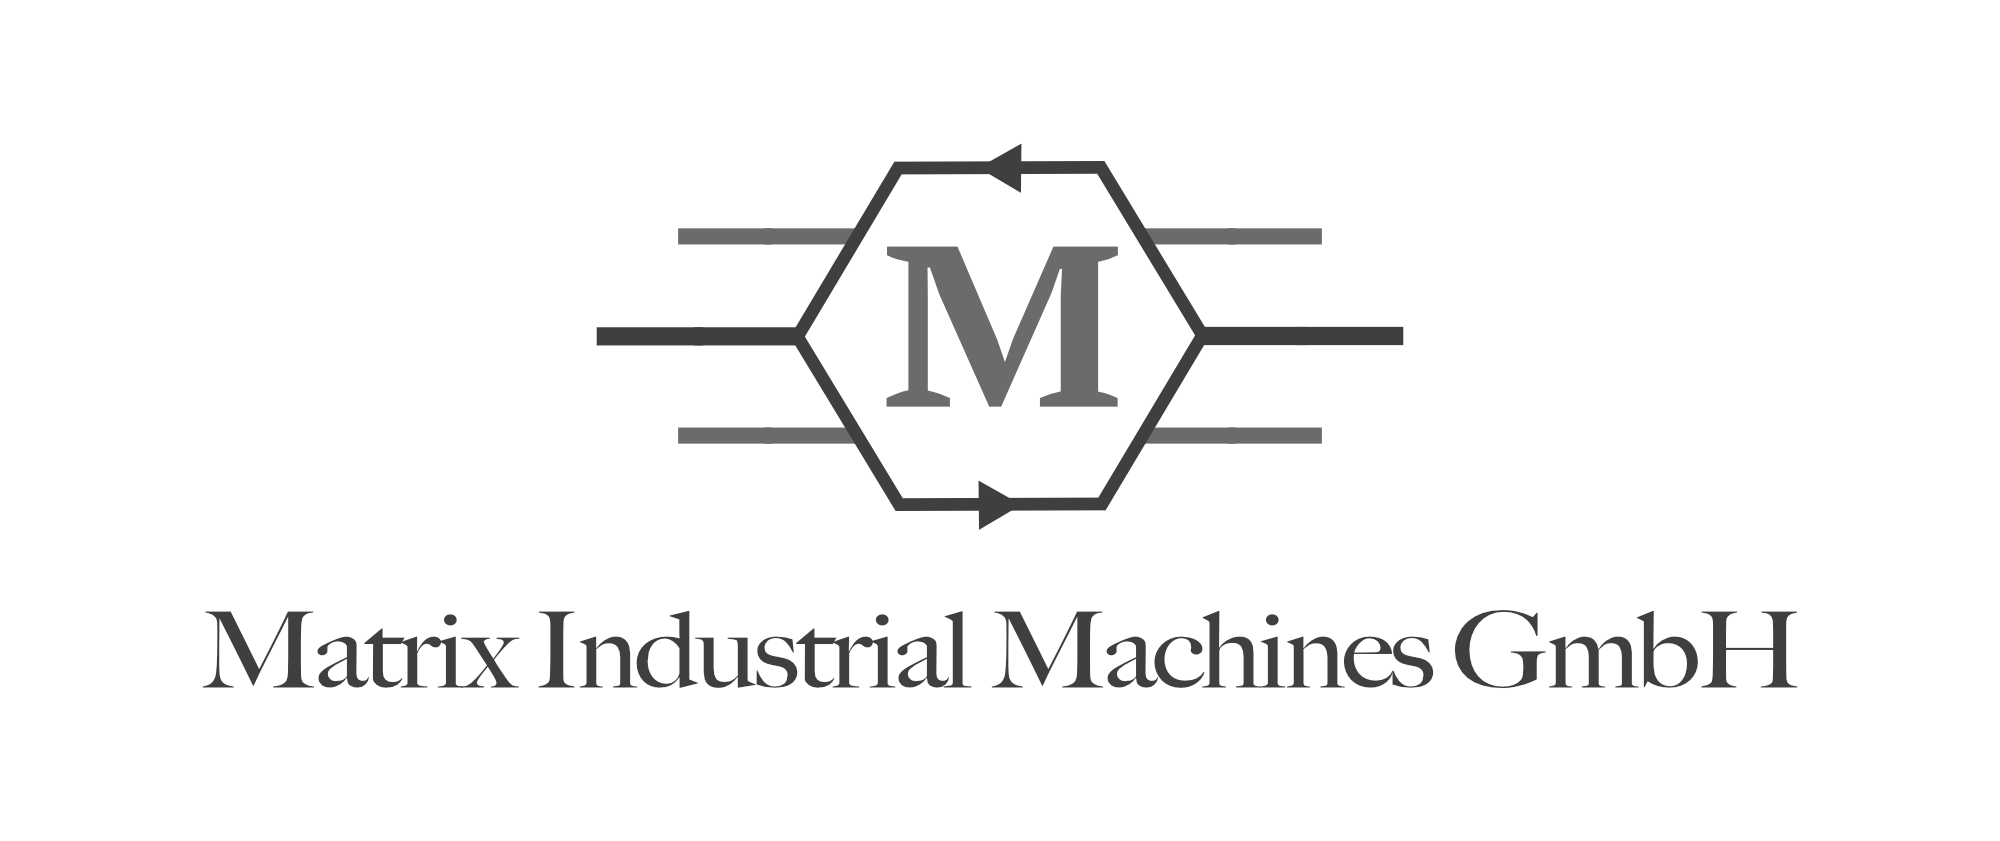 Matrix Industrial Machines GmbH